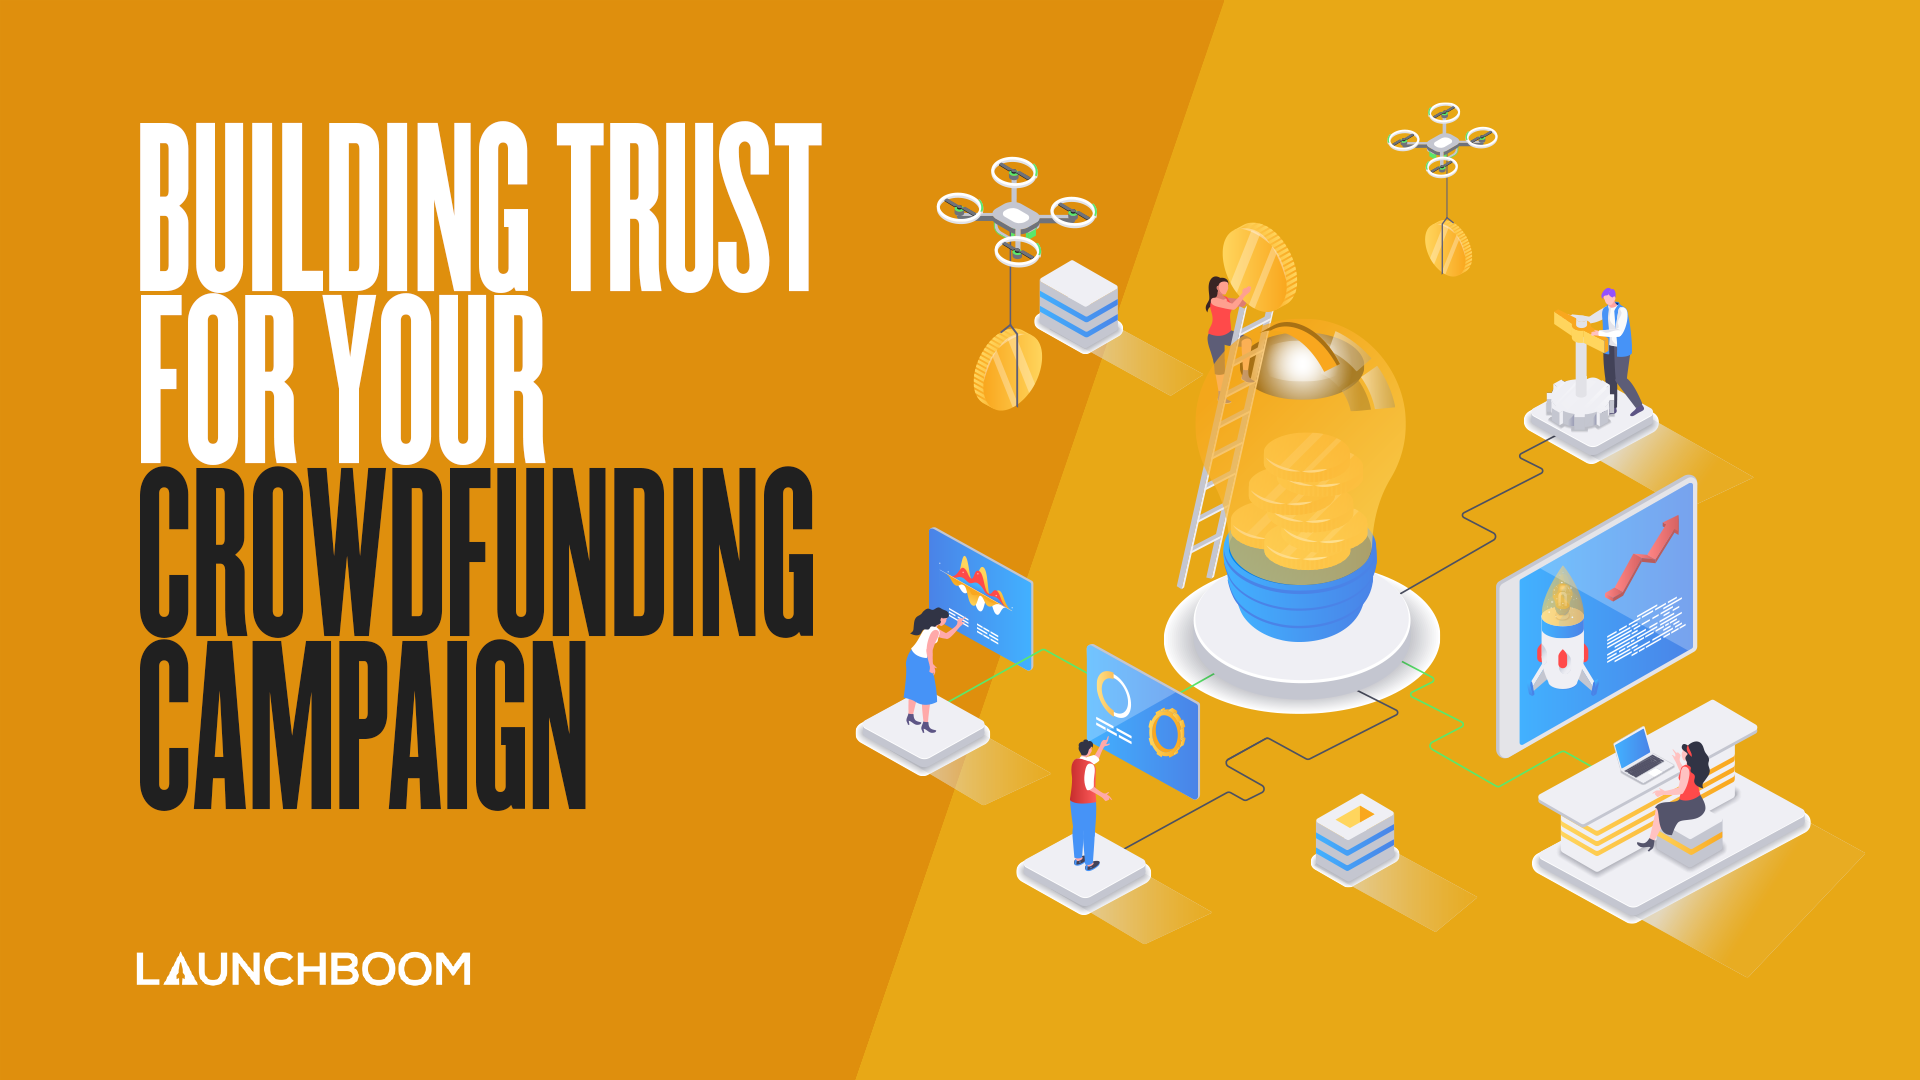 Building trust in crowdfunding